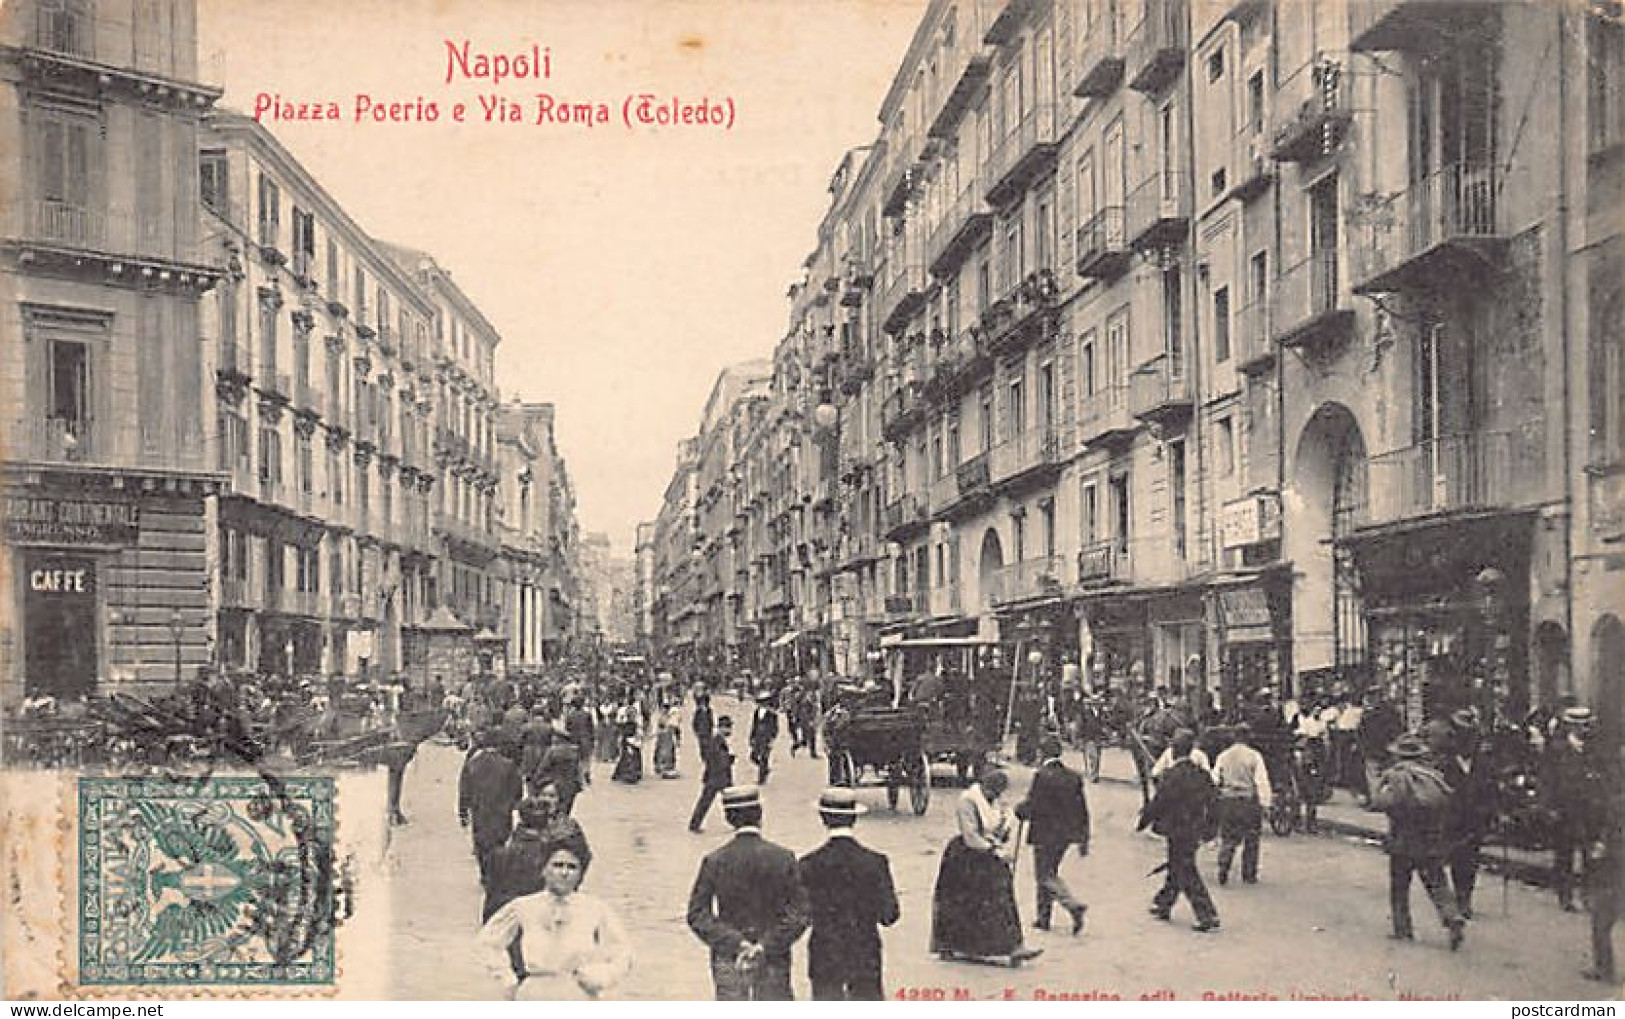  NAPOLI - Piazza Poerio E Via Roma (Toledo) - Napoli (Naples)